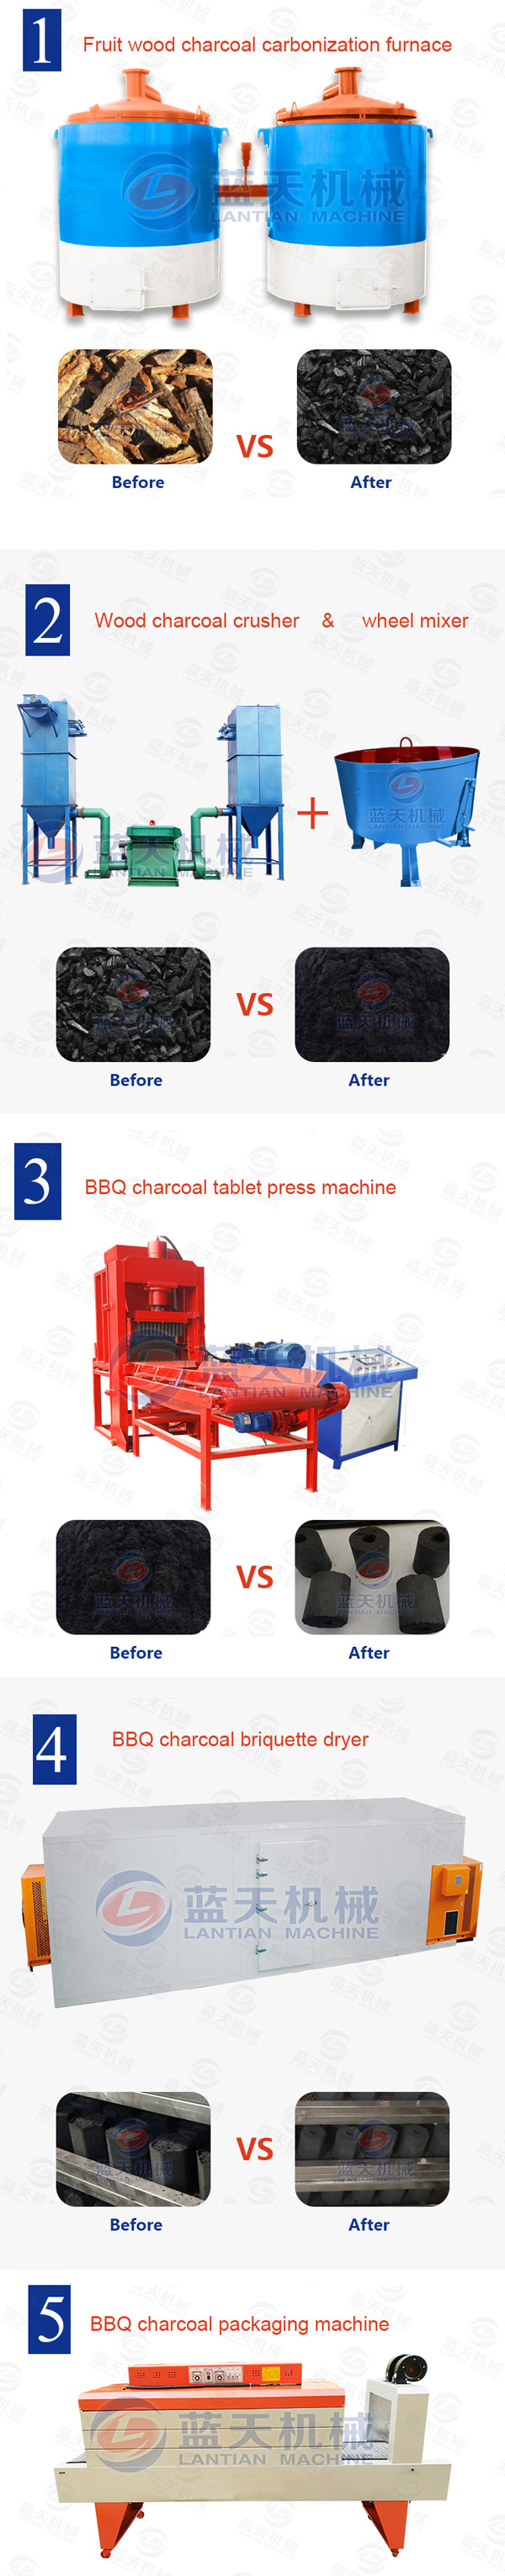 BBQ charcoal tablet press equipment